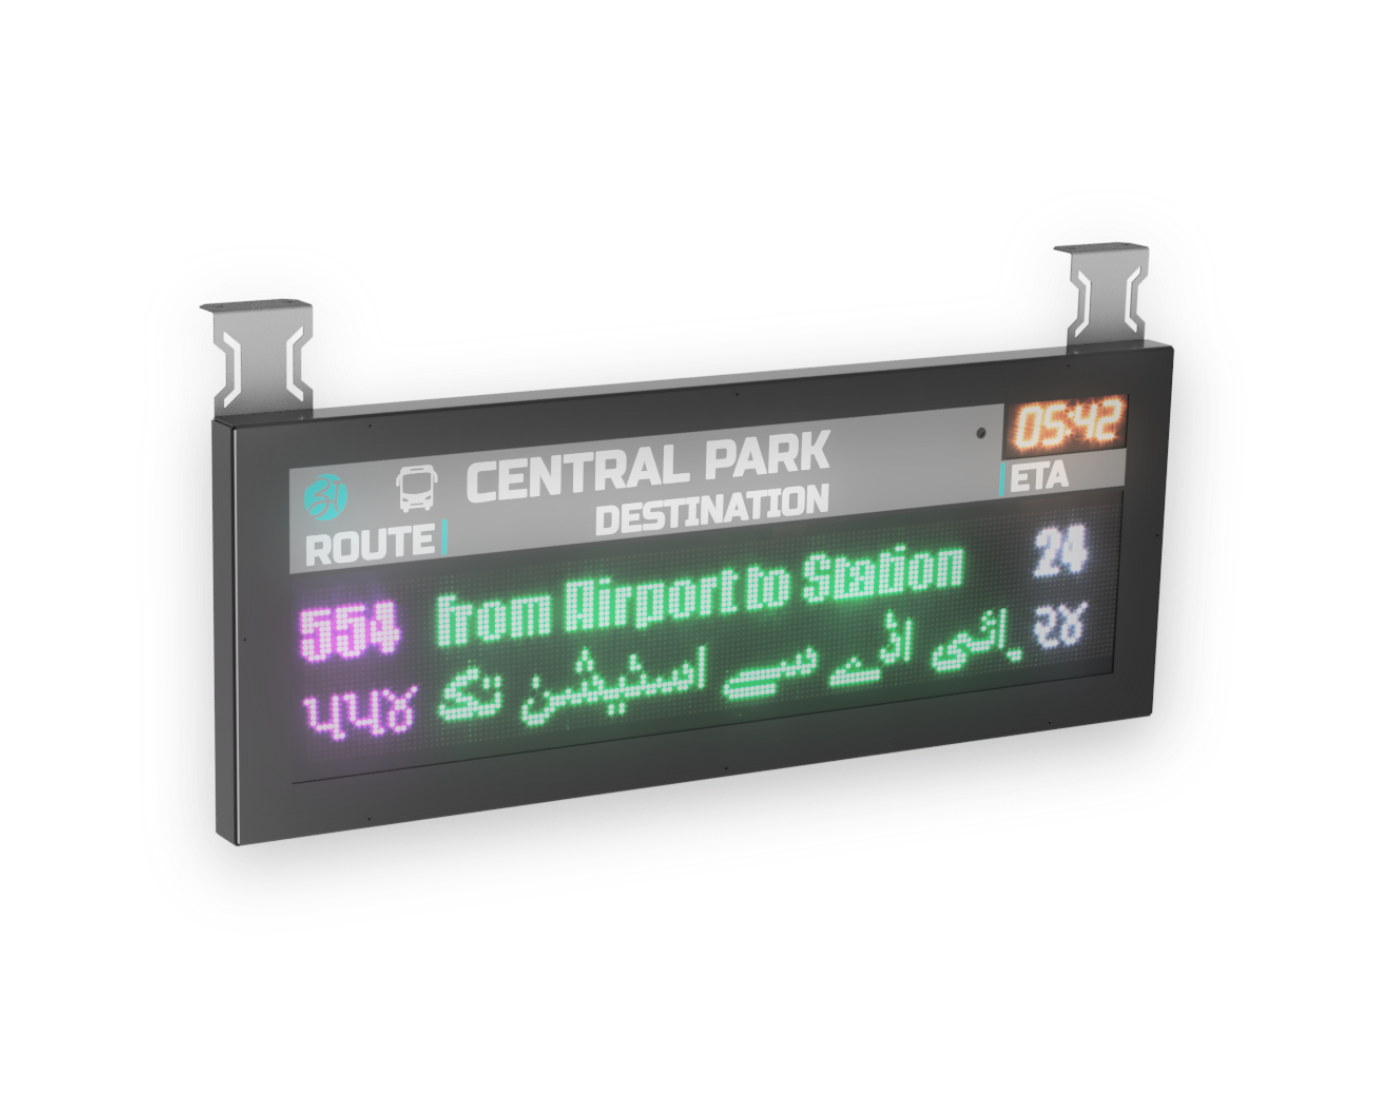 2 line Passenger Information Display APIS-160-2M